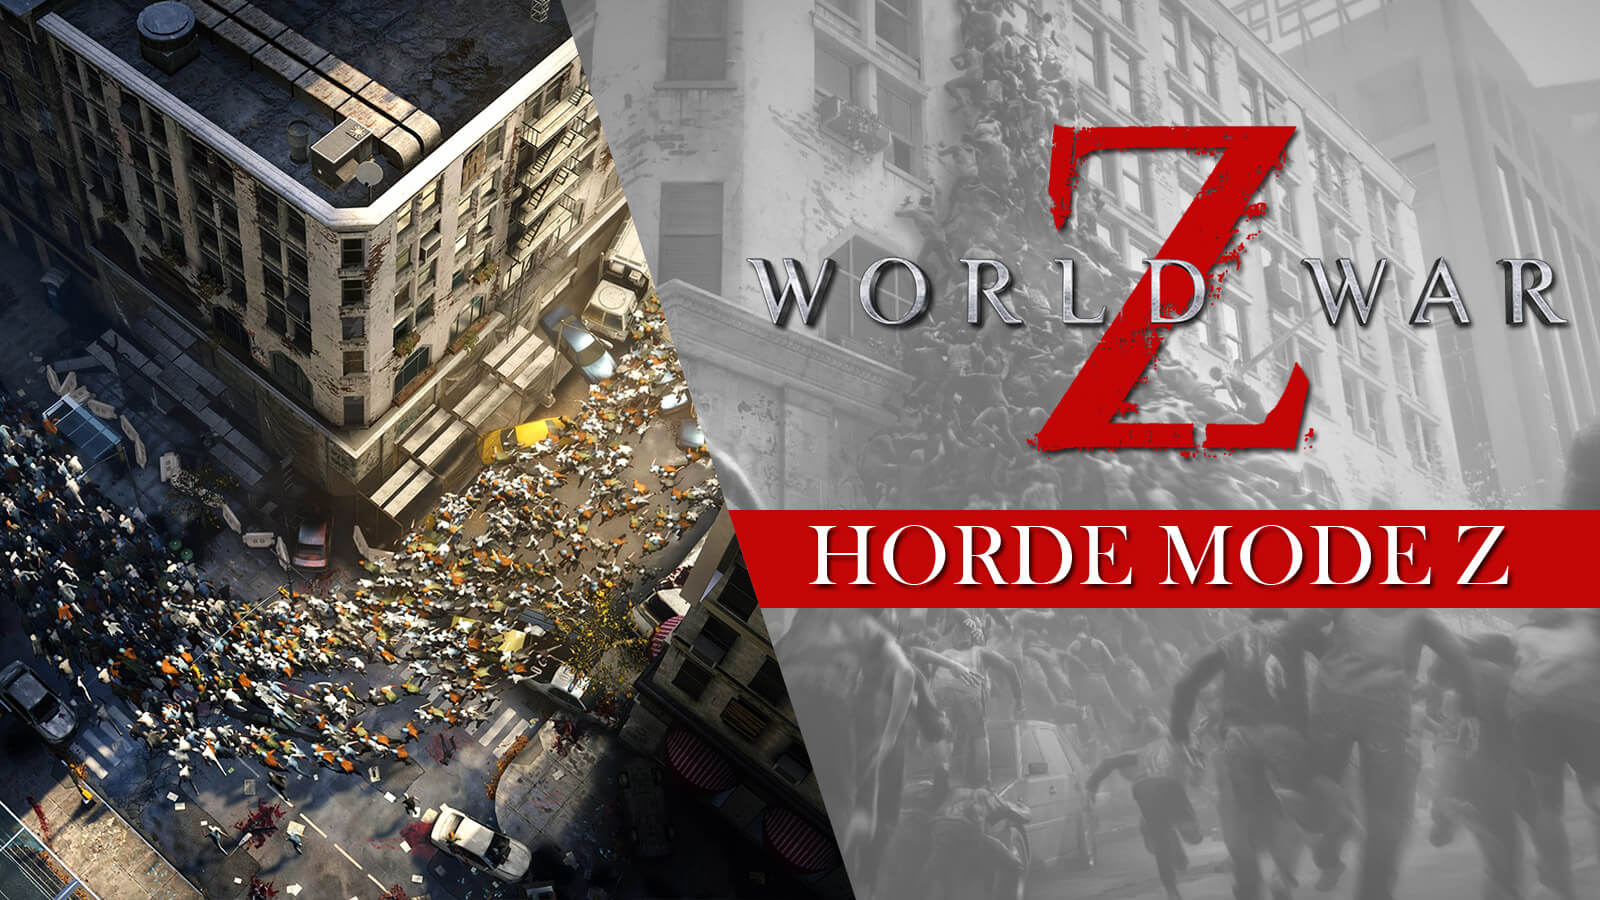 World War Z Horde Mode Z Update Live Now